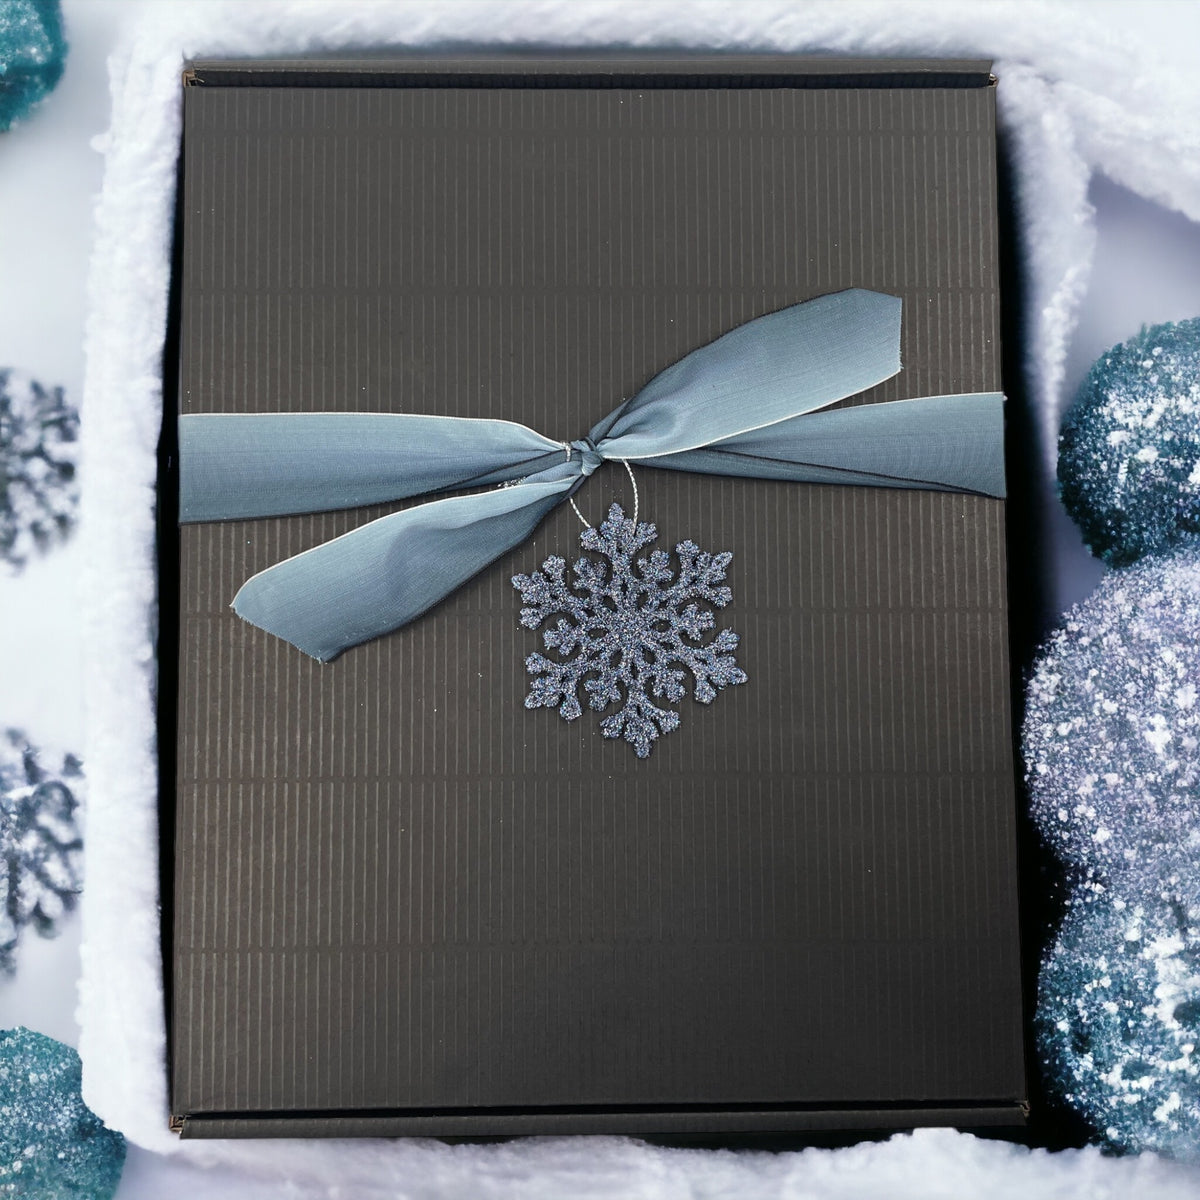 Indulgente fiesta de chocolate italiano: regalo navideño corporativo perfecto